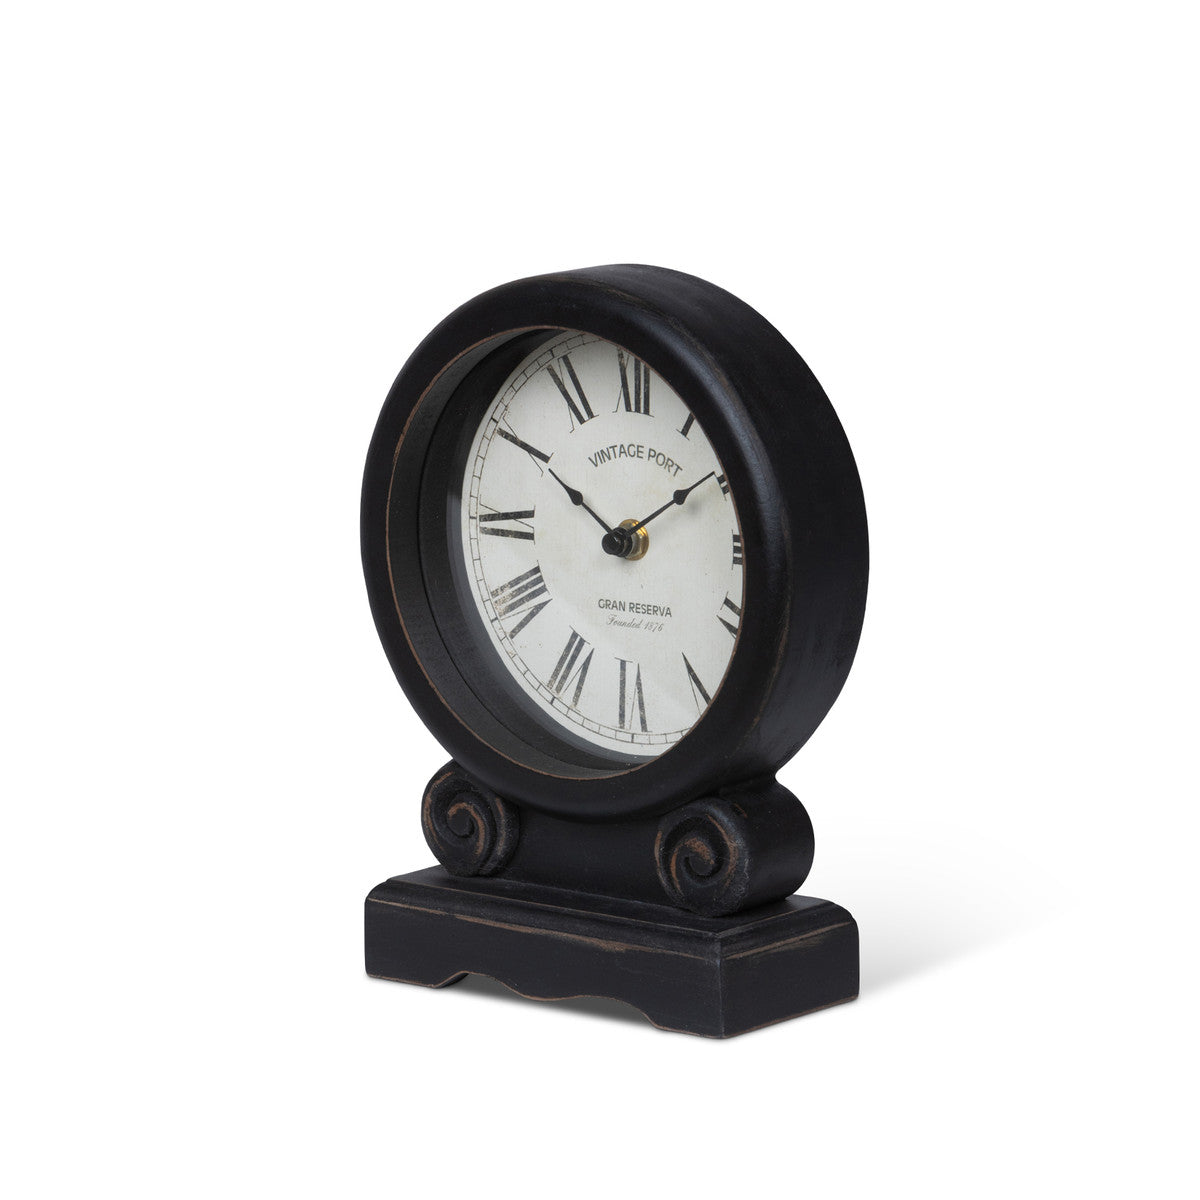 Wooden Mantel Clock